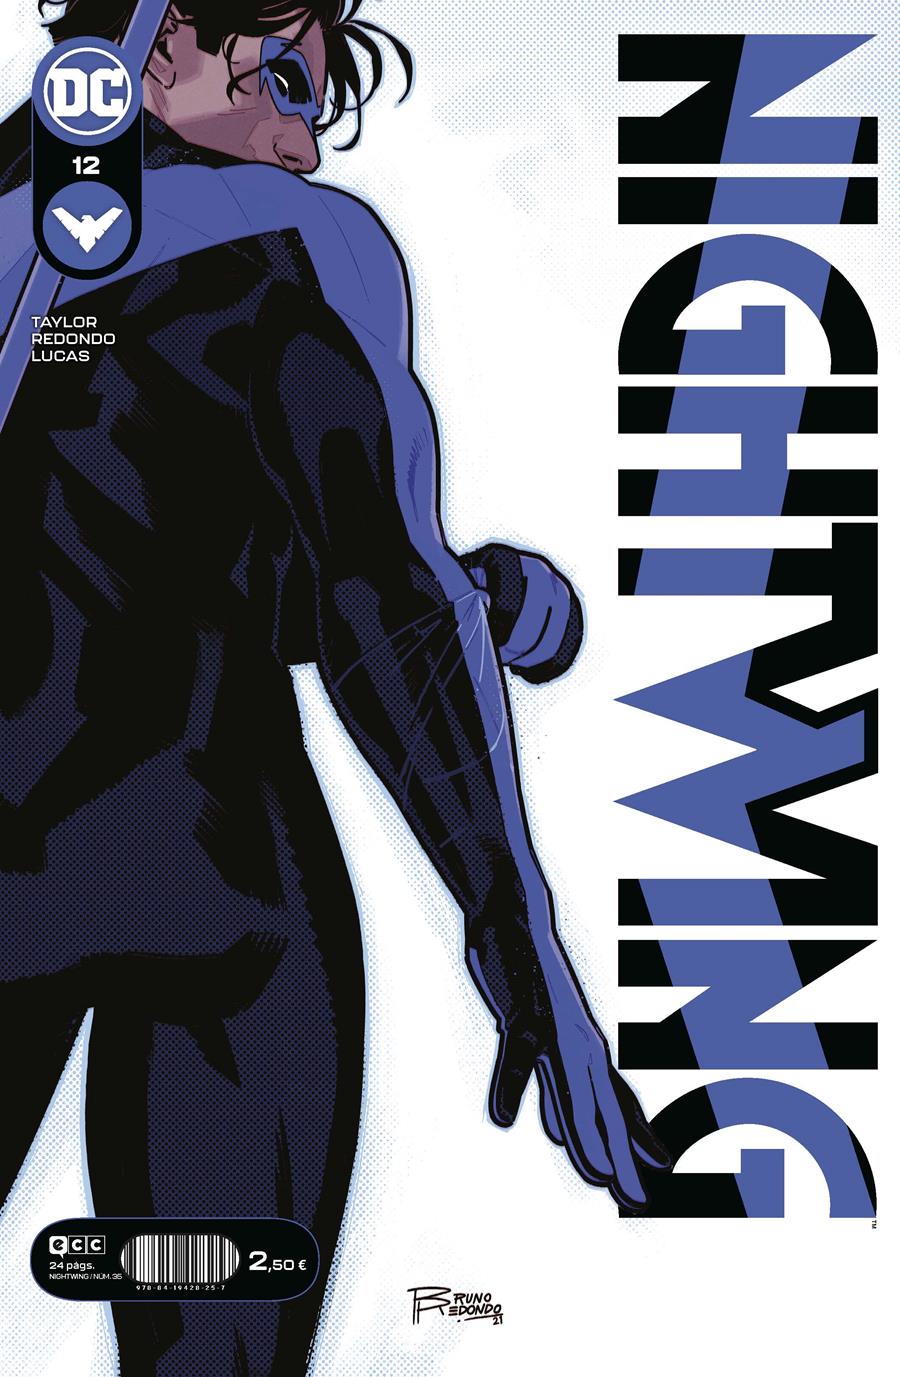 Nightwing núm. 12 | N0922-ECC26 | Bruno Redondo / Tom Taylor | Terra de Còmic - Tu tienda de cómics online especializada en cómics, manga y merchandising